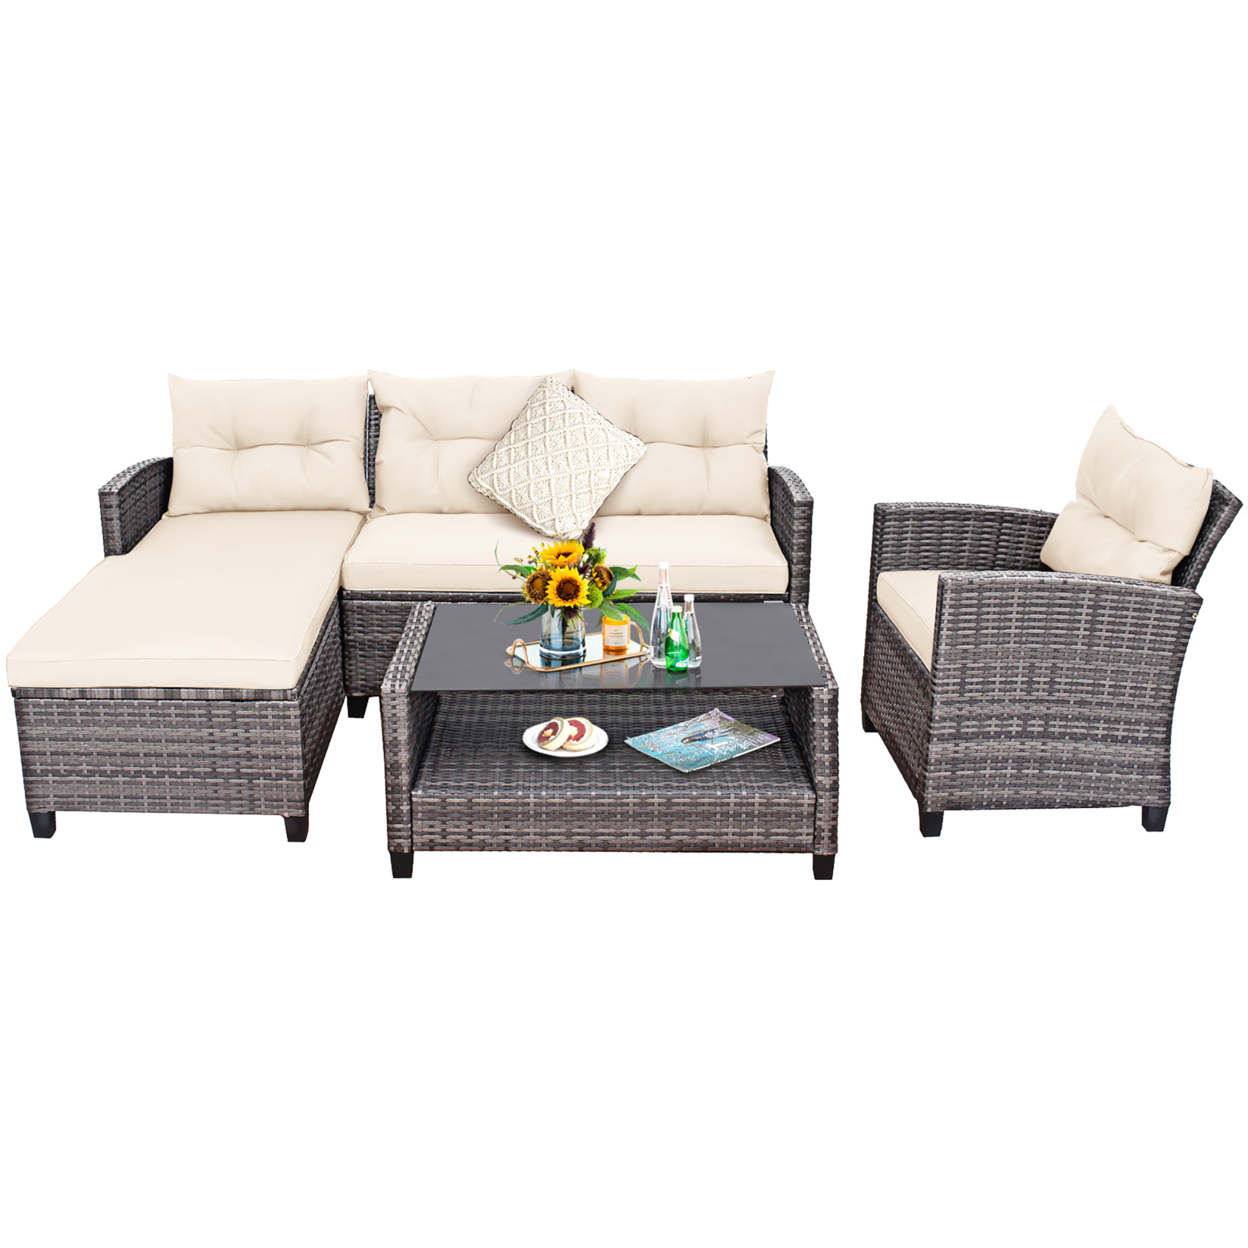 4PCS Rattan Patio Conversation Furniture Set Outdoor Sectional Sofa Set White